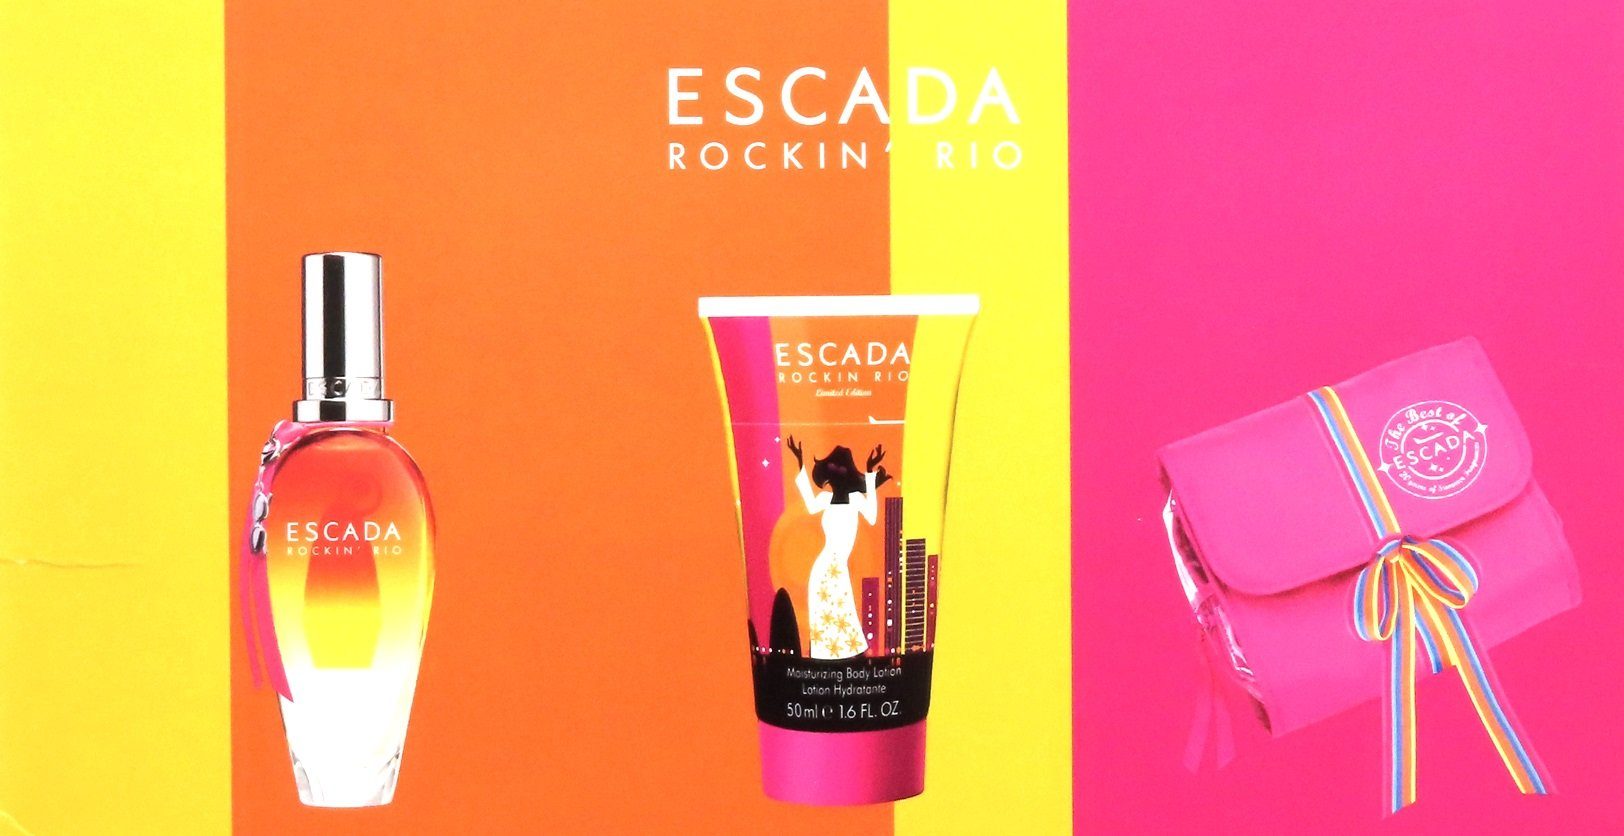 Spray RIO 50ml Eau + Escada de Beauty ROCKIN Edt body ESCADA + 50ml Pouch lotion Toilette